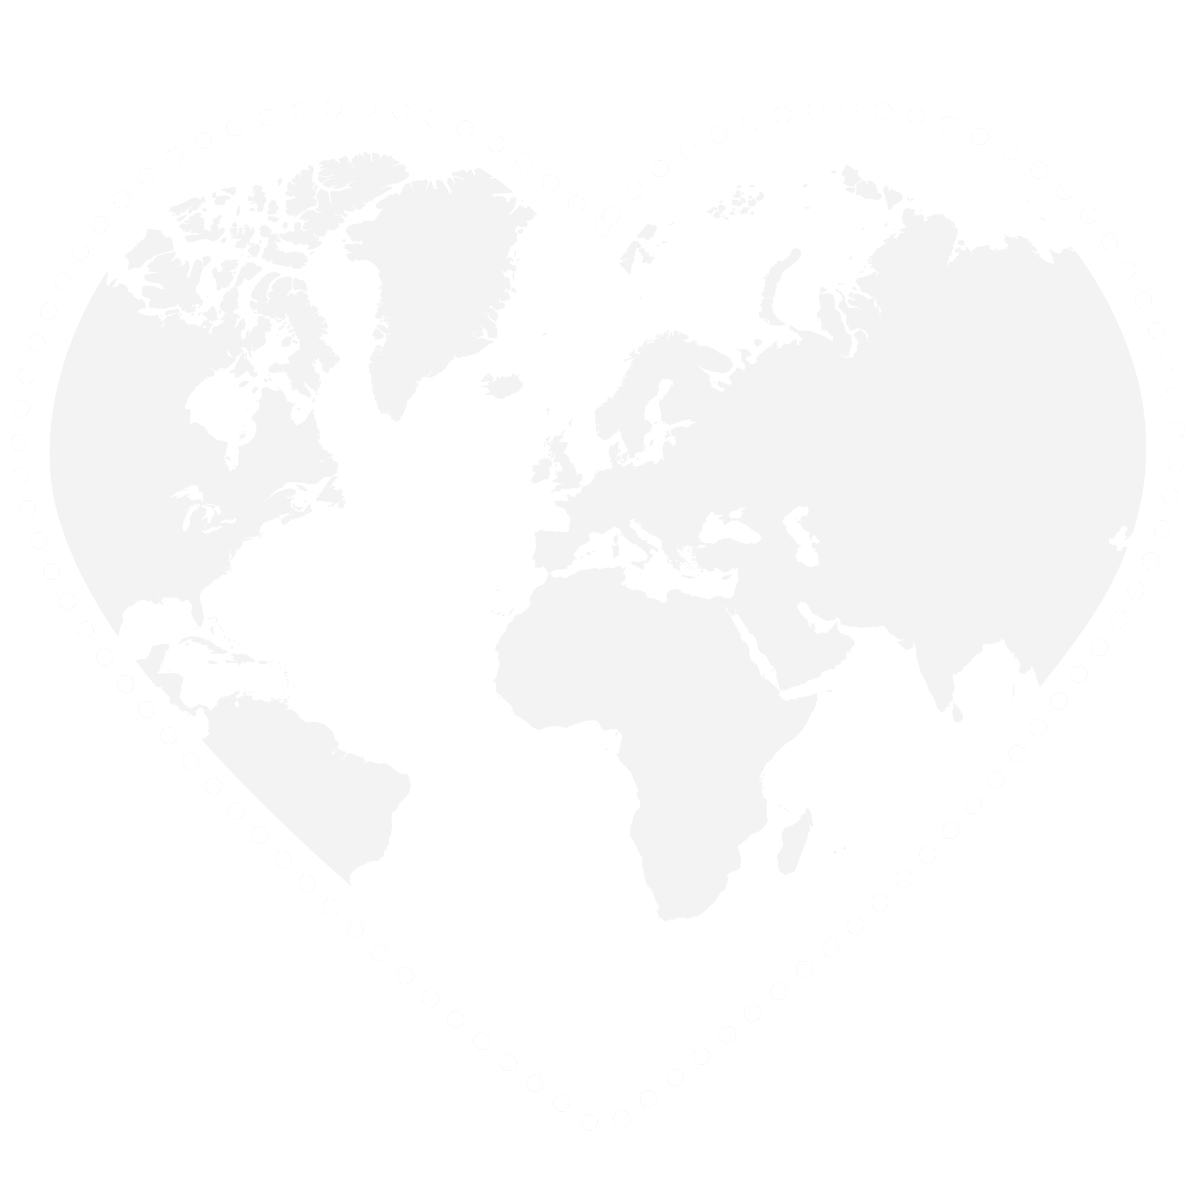 World heart icon